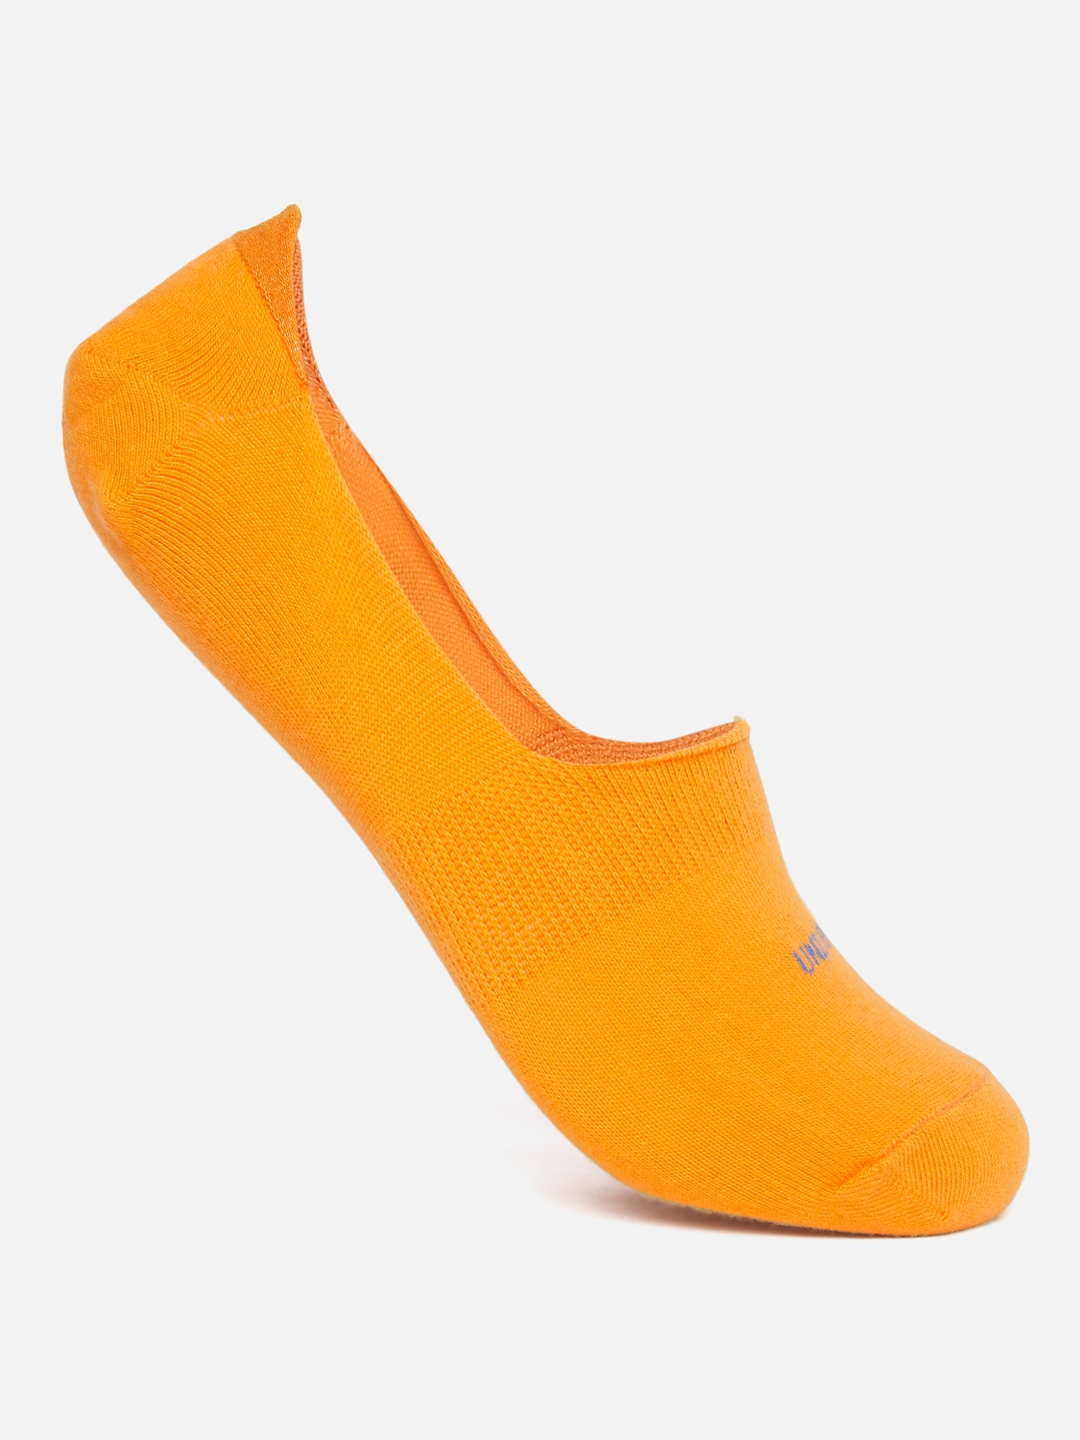 Spykar | Underjeans by Spykar Men Orange NO SHOW Single Pair of Socks